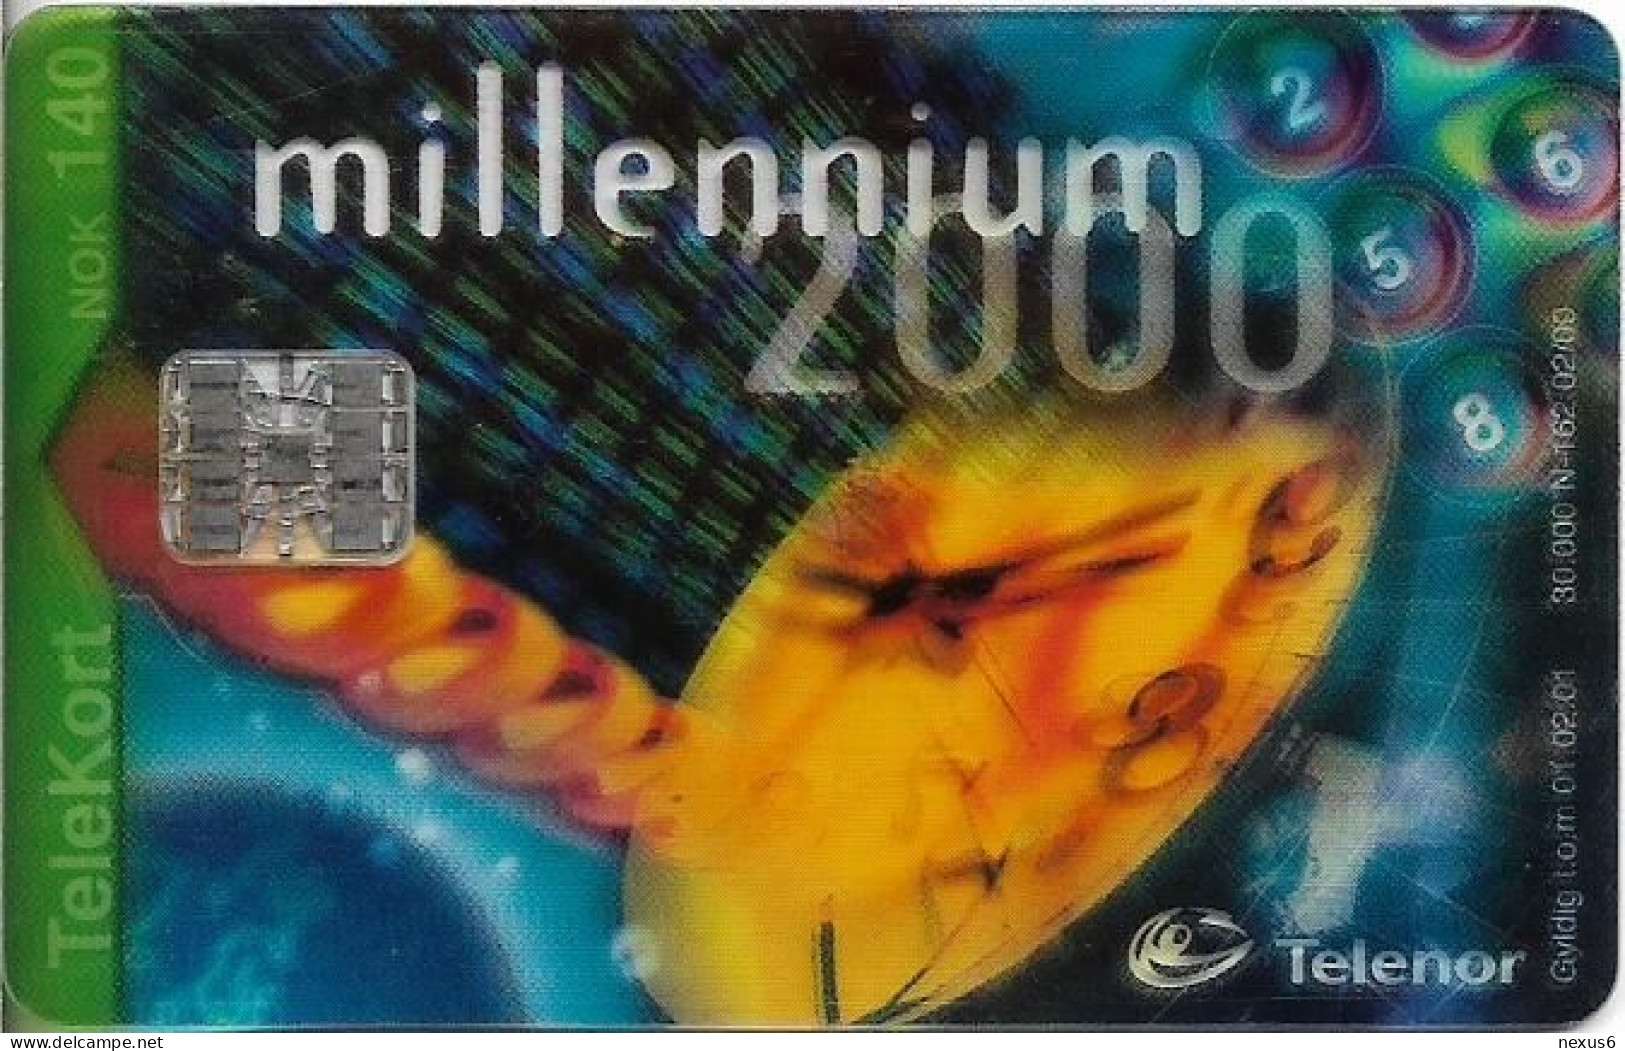 Norway - Telenor - Millennium 2000 (Transparent Card) - N-162 - 02.2000, 140U, 30.000ex, Used - Norvège